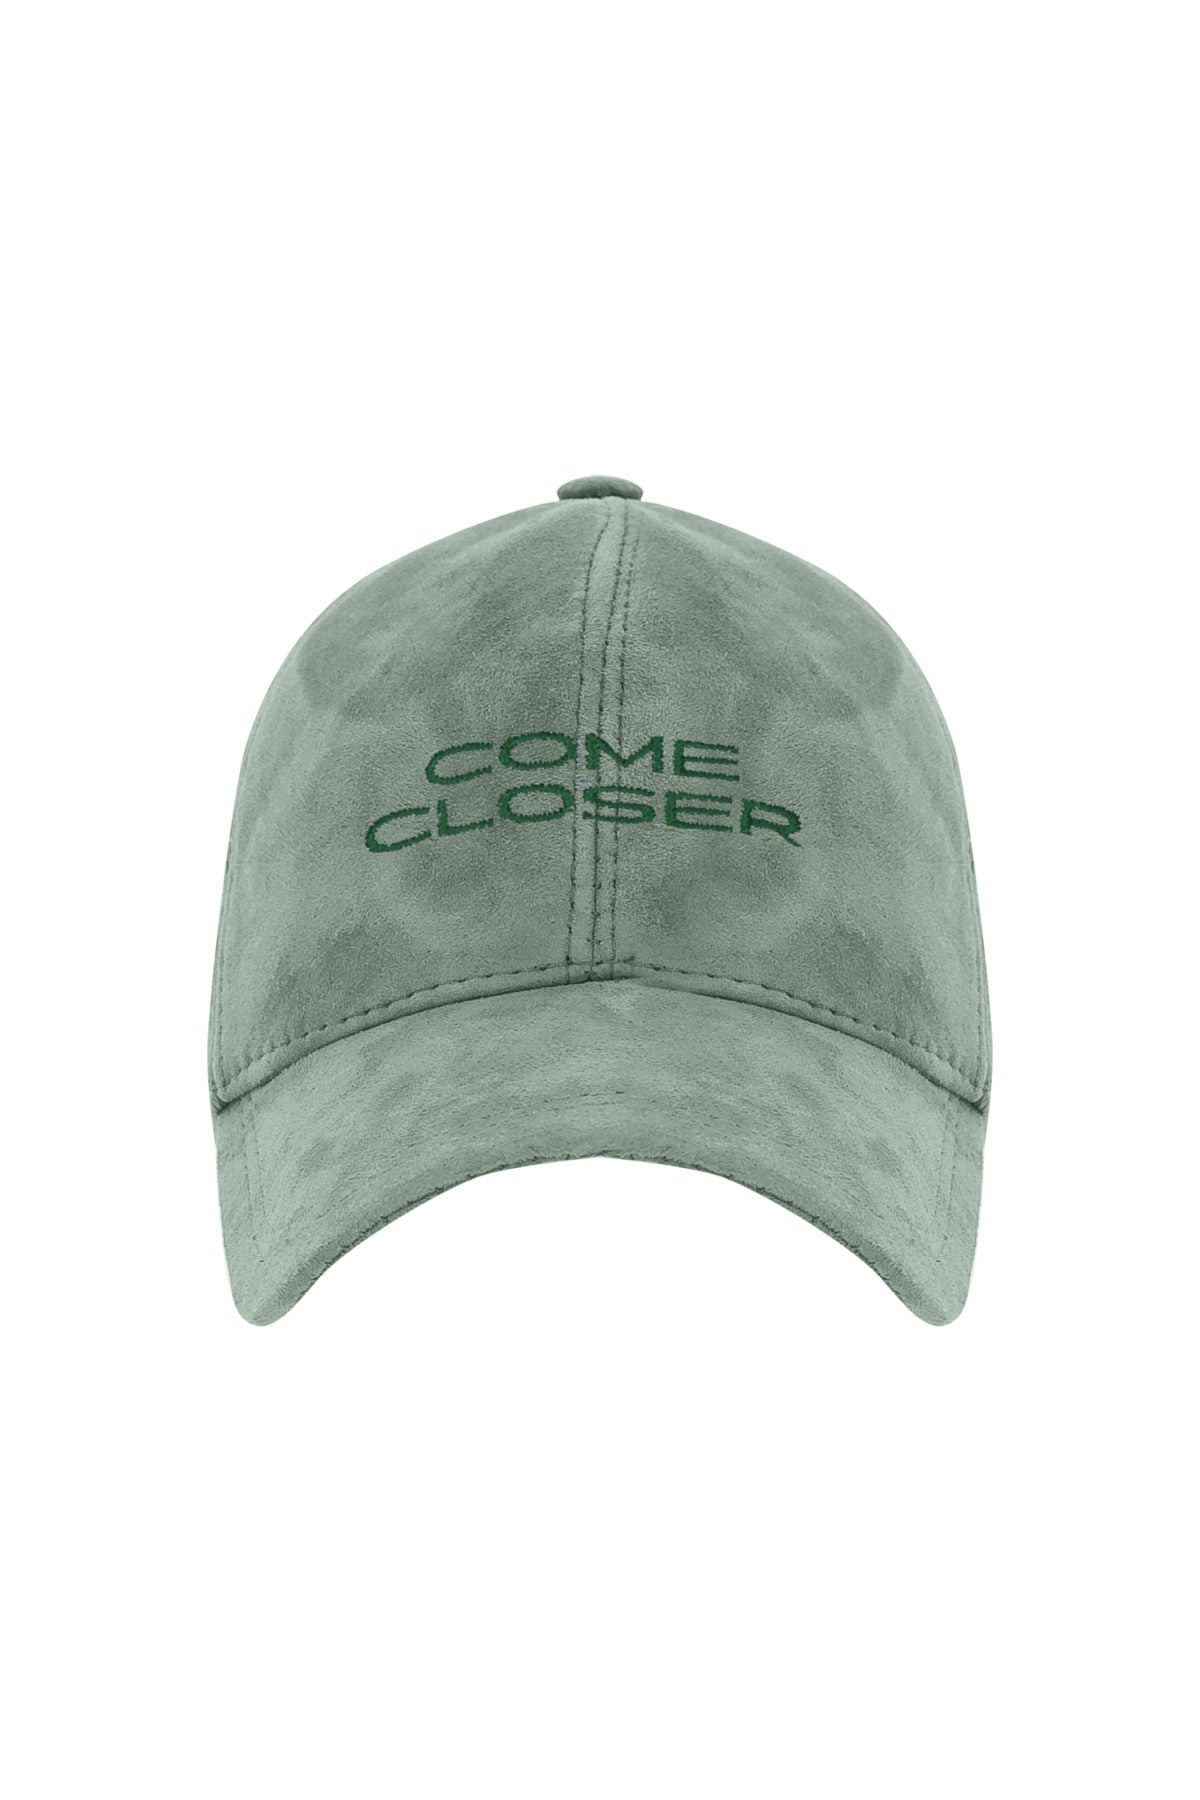 Come Closer - Deniz Yeşili